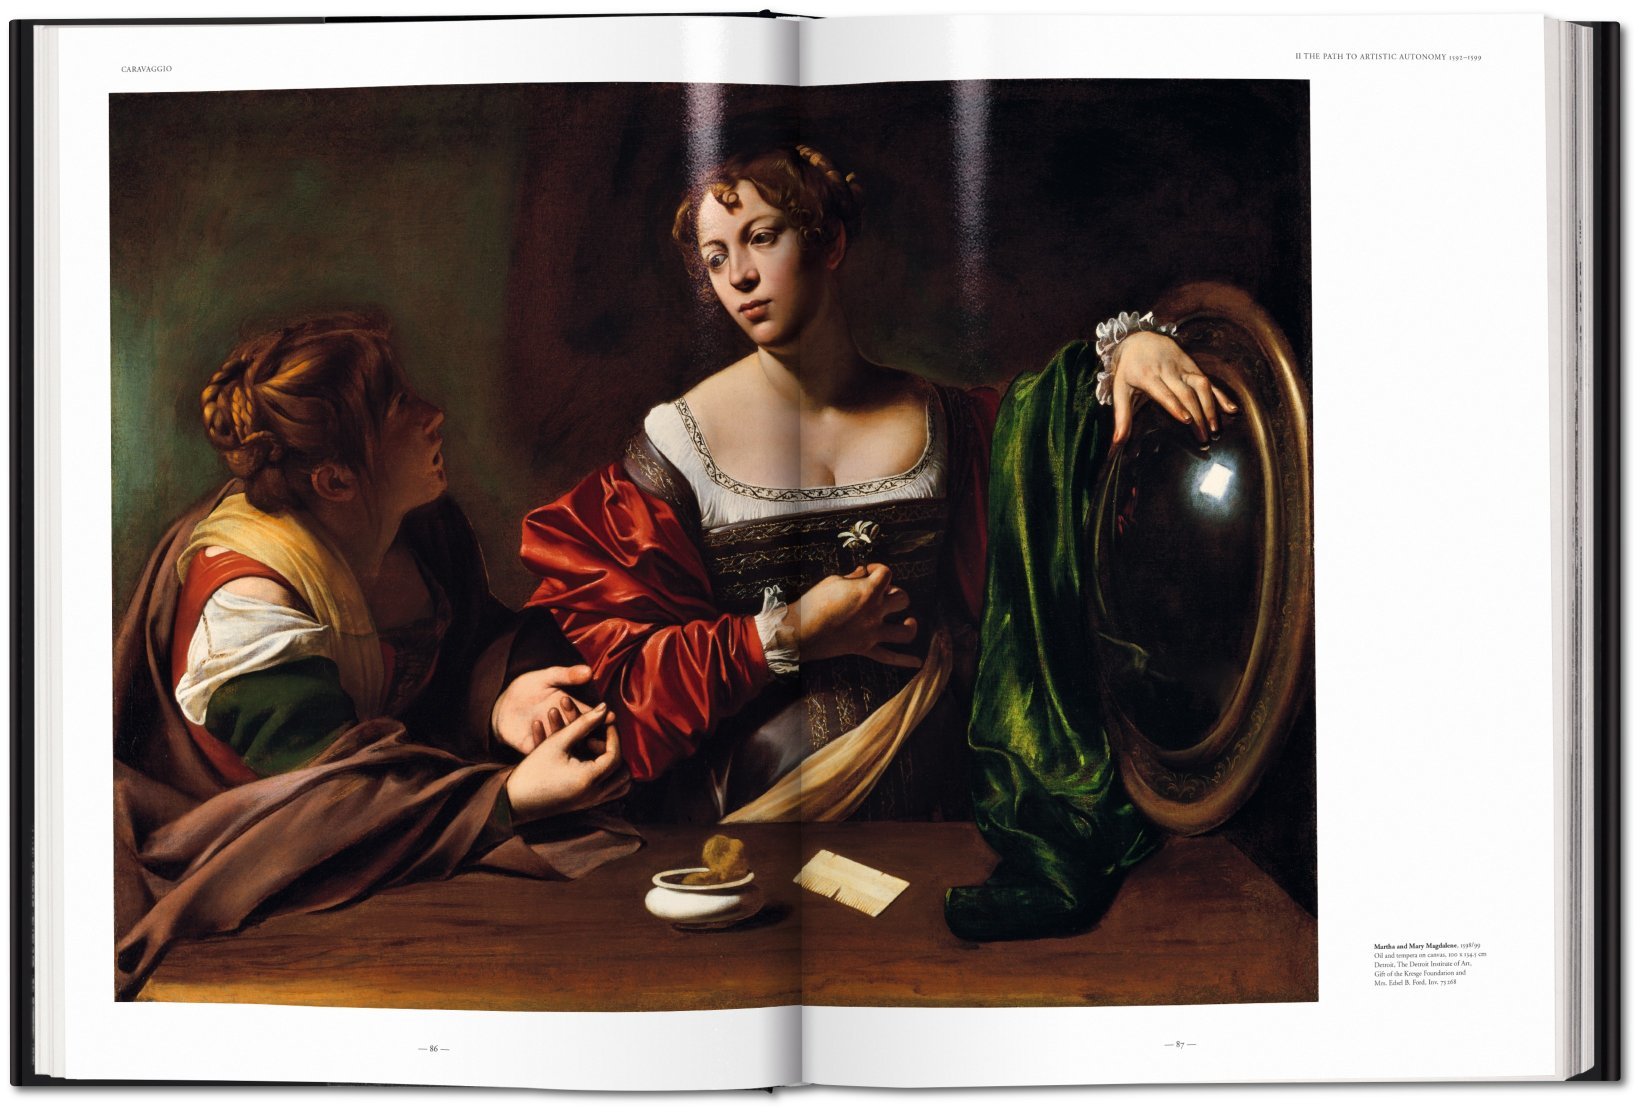 Caravaggio, The Complete Works